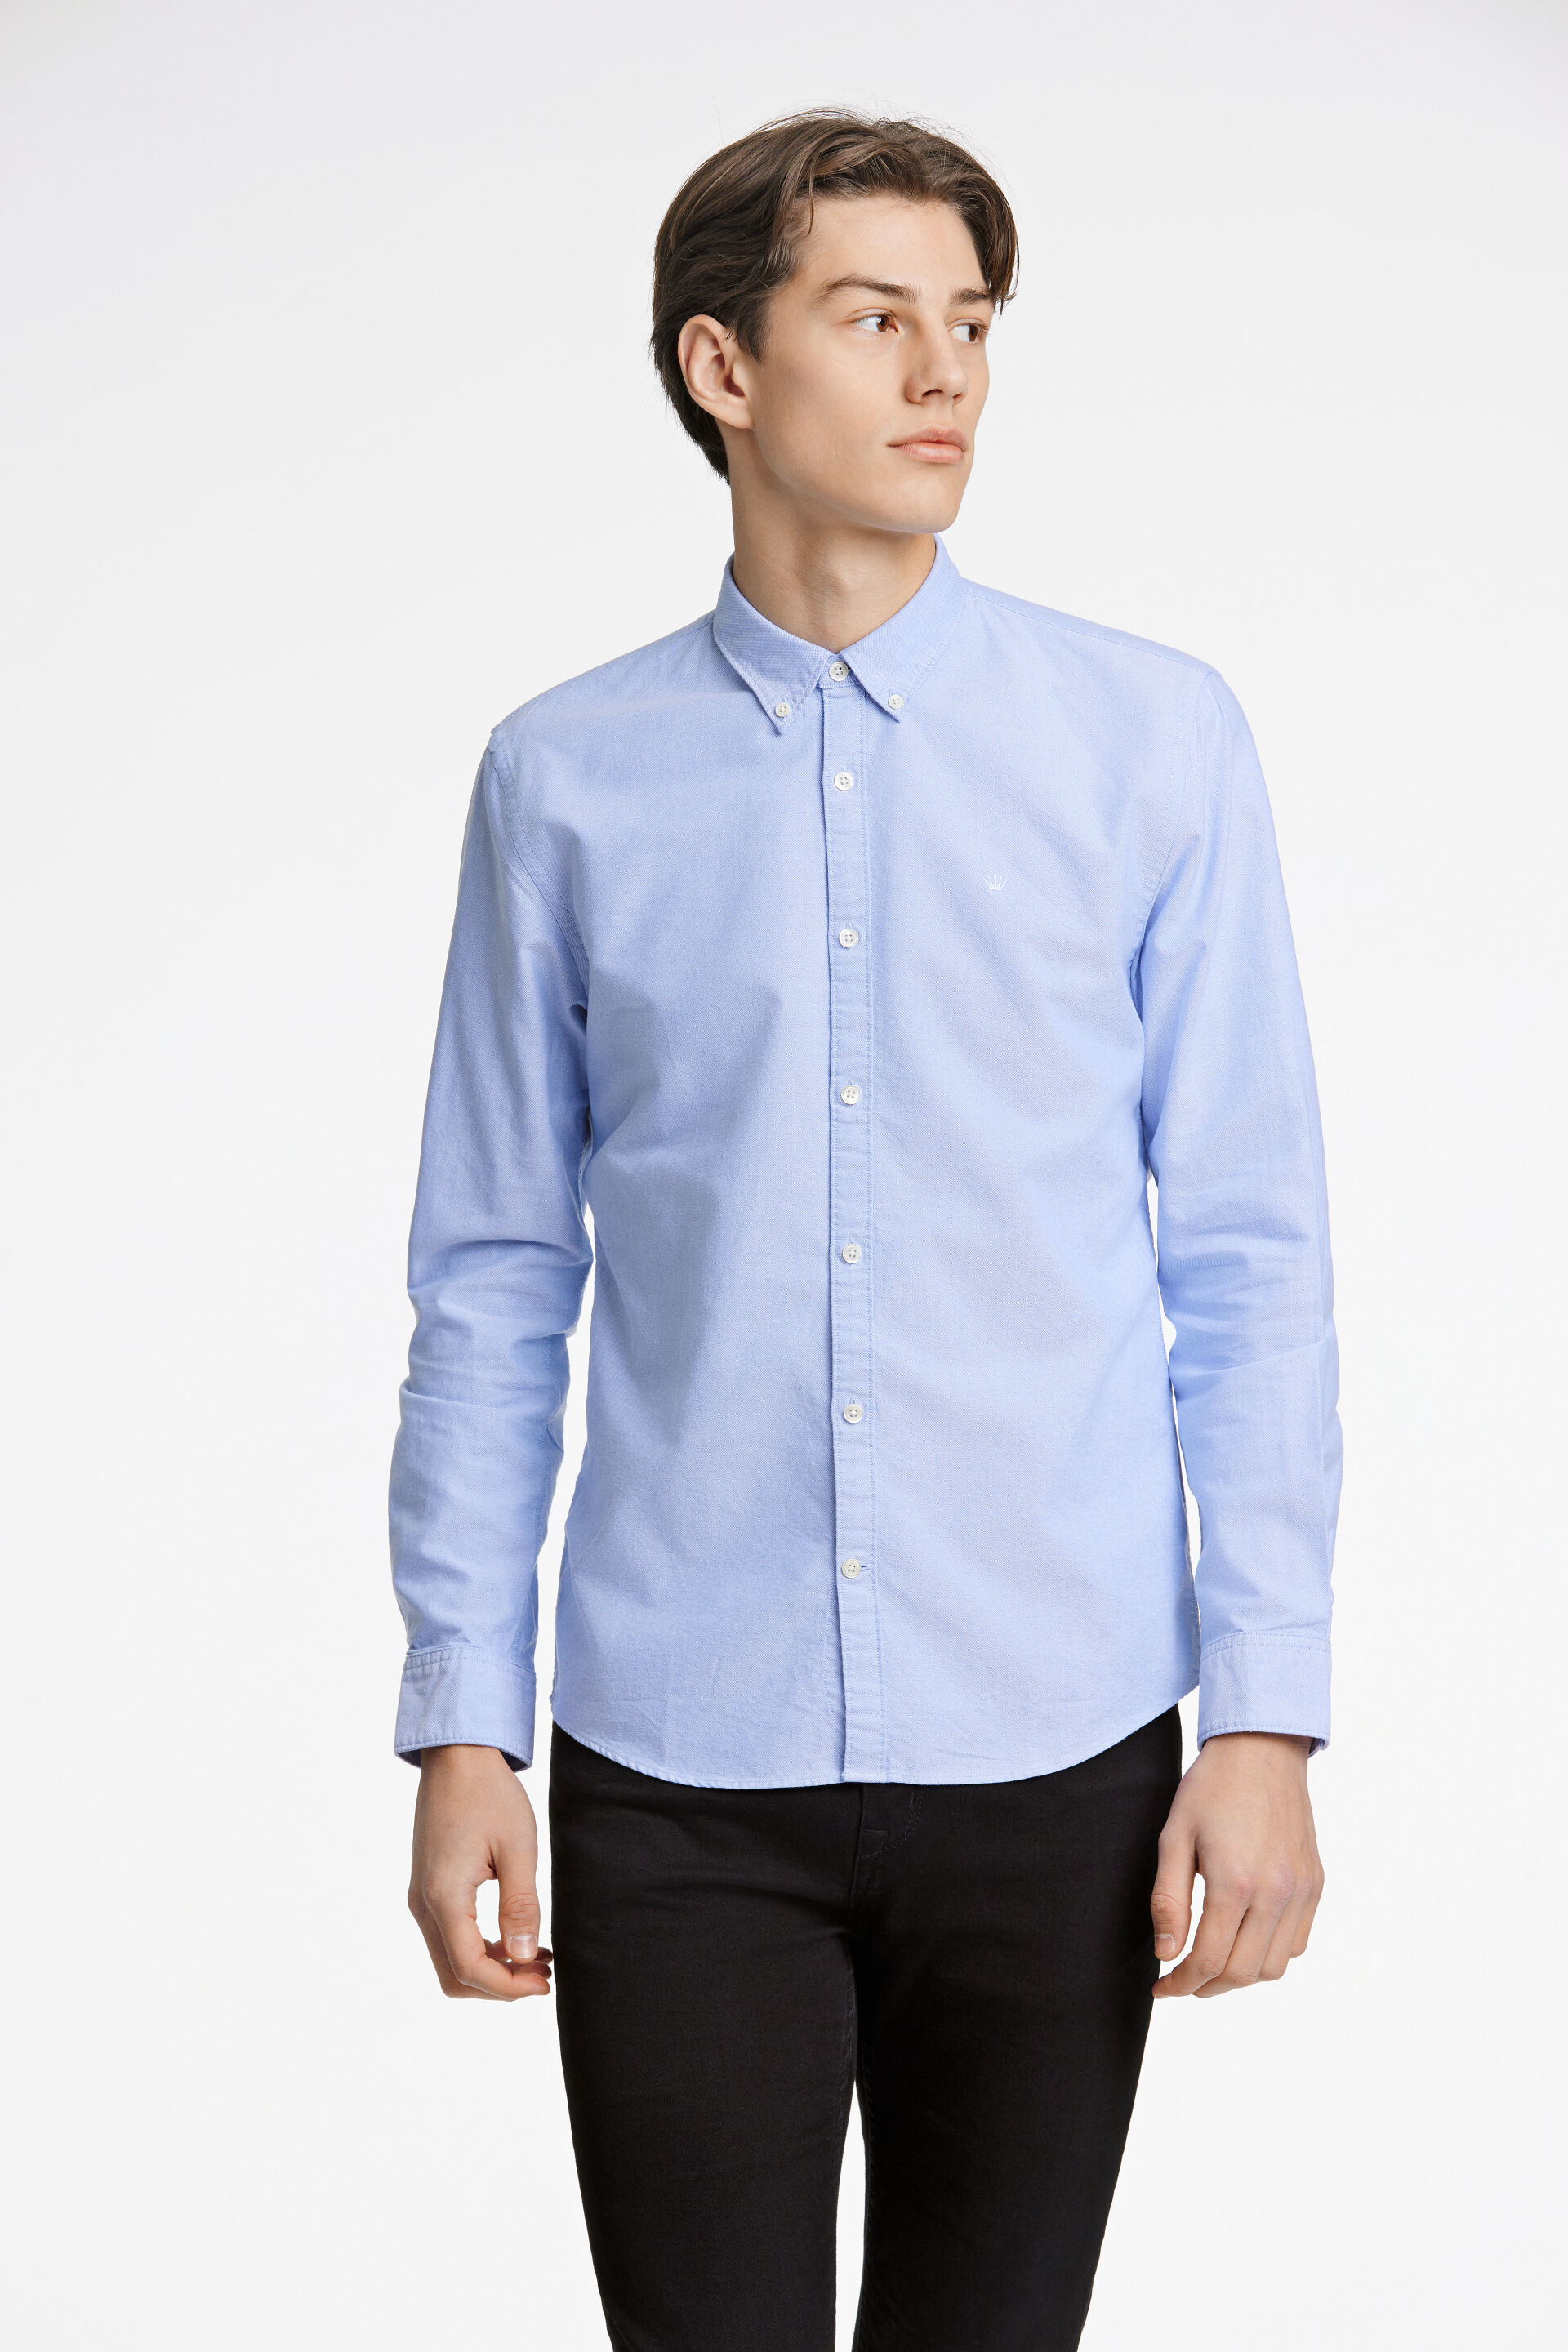 Oxford shirt Oxford shirt Blue 60-205020